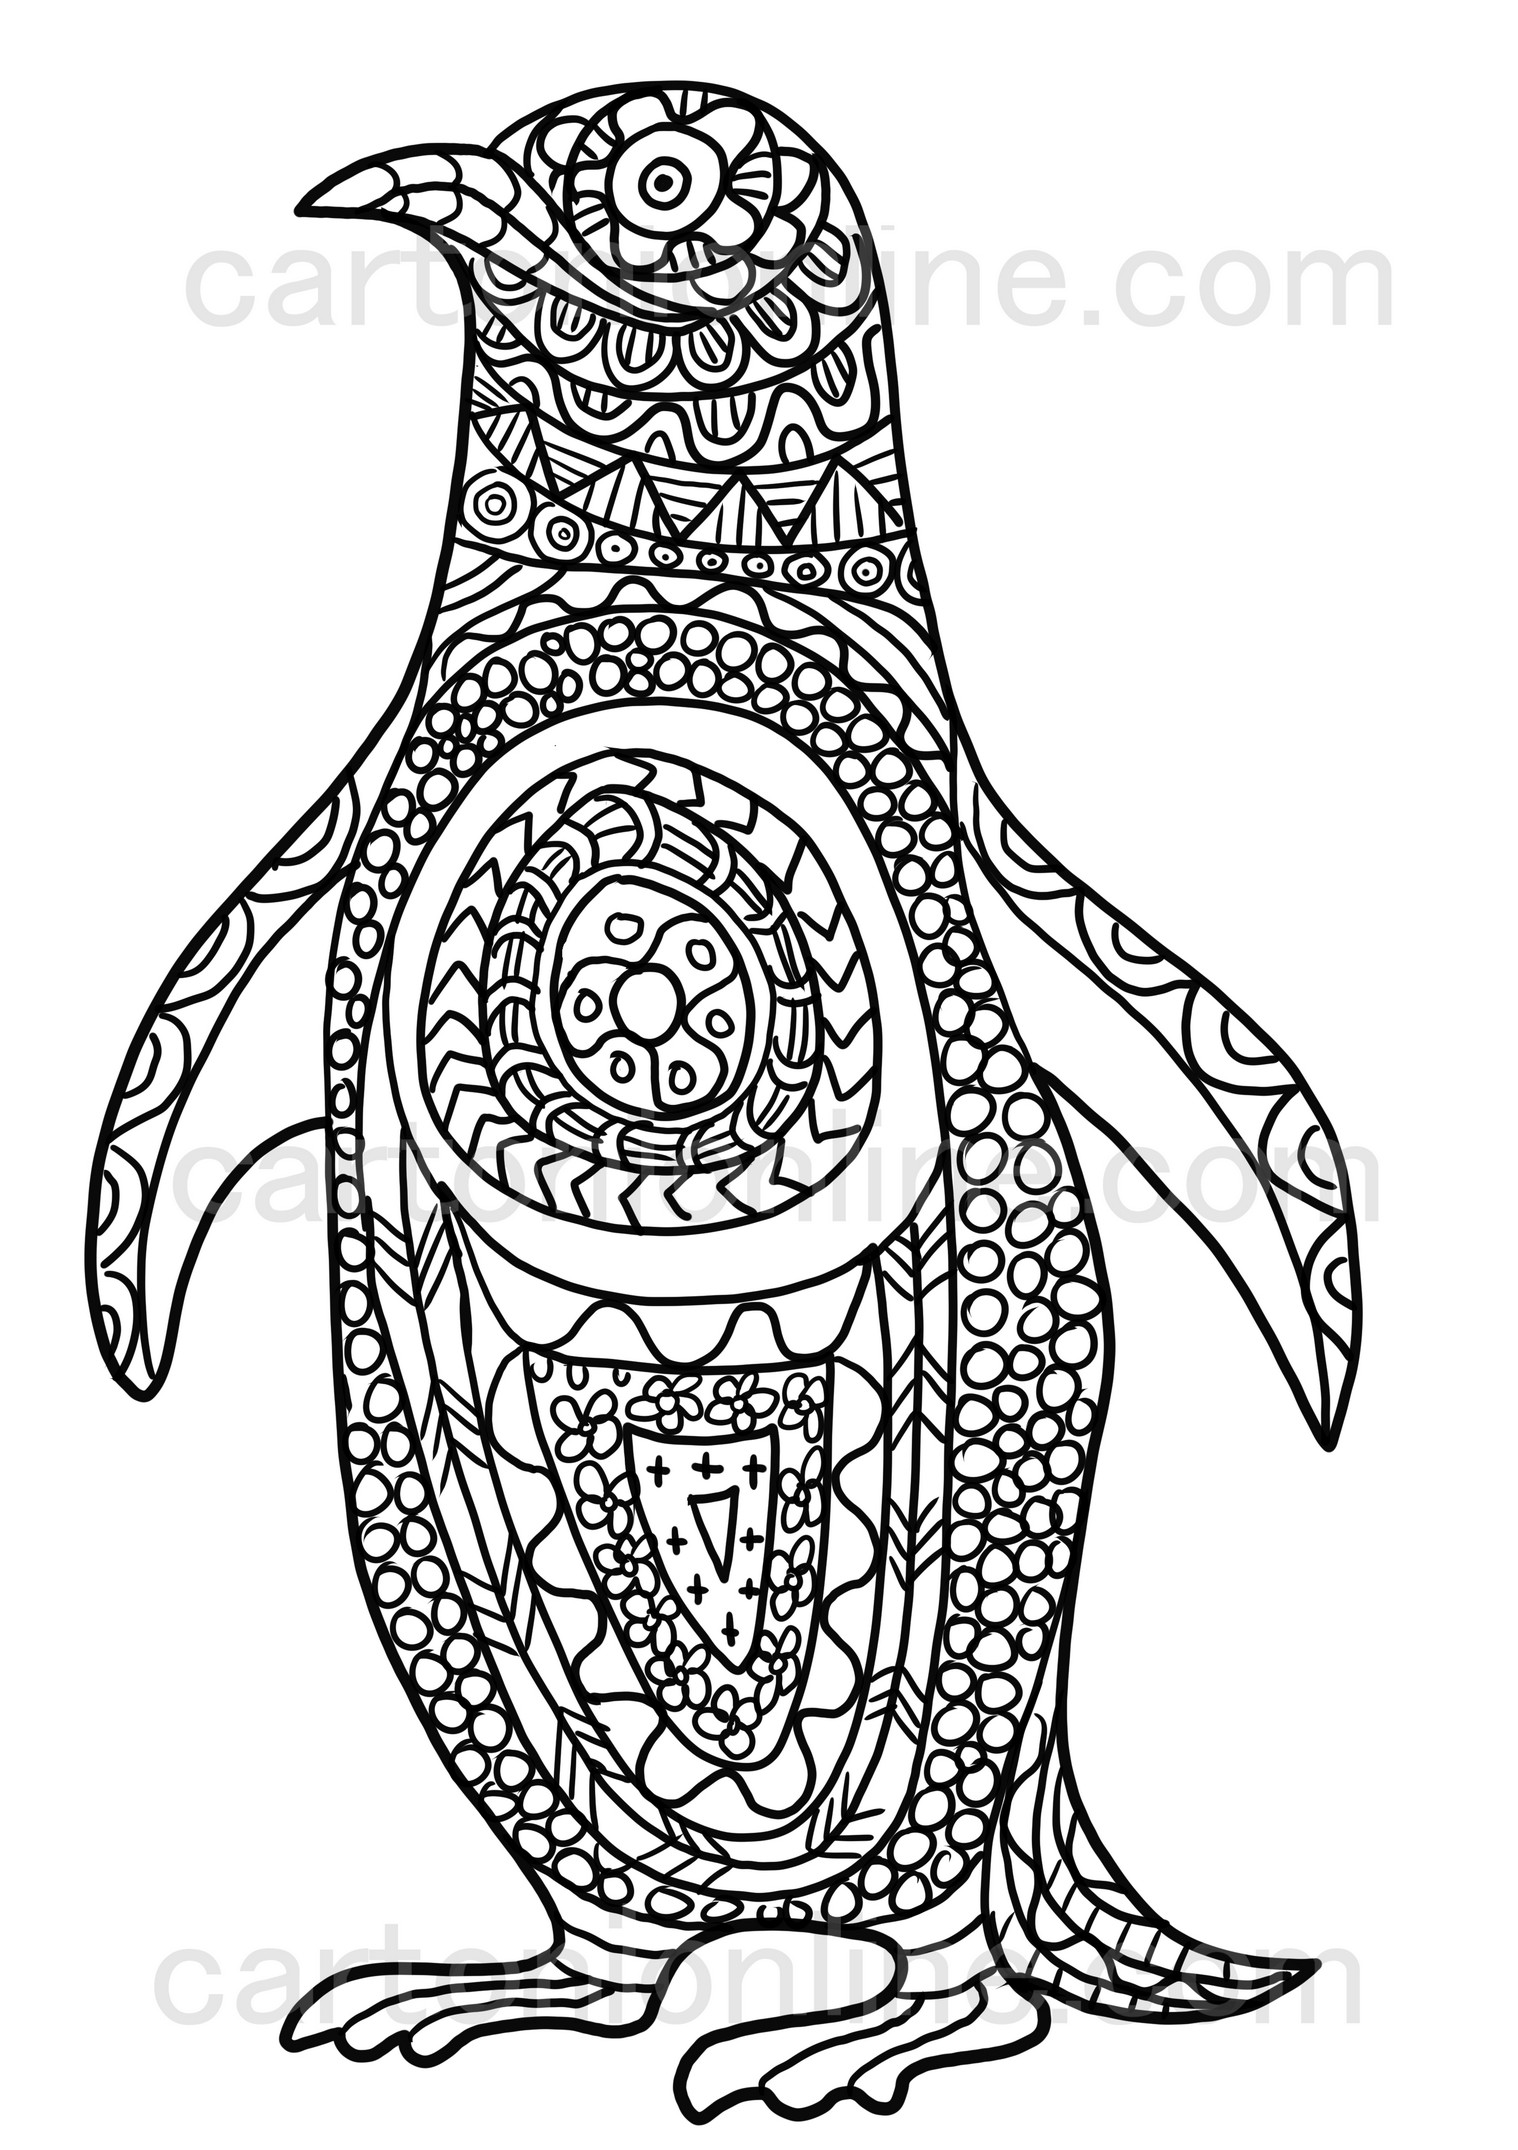 Dibujo de Pingüino realista para colorear